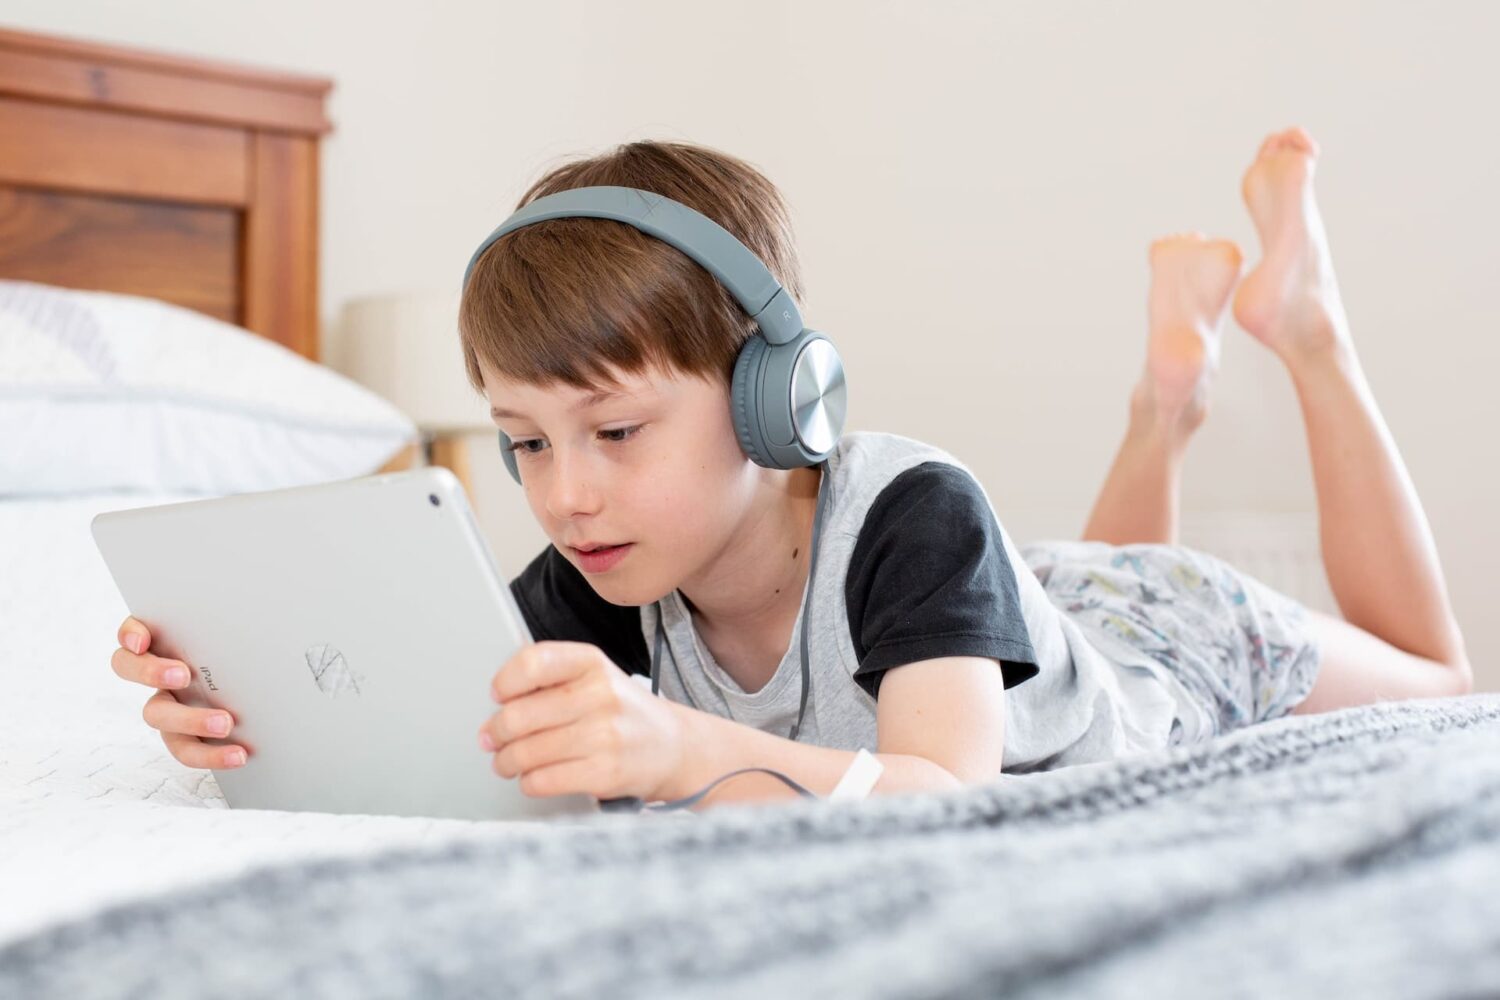 Child using old iPad with headphones on